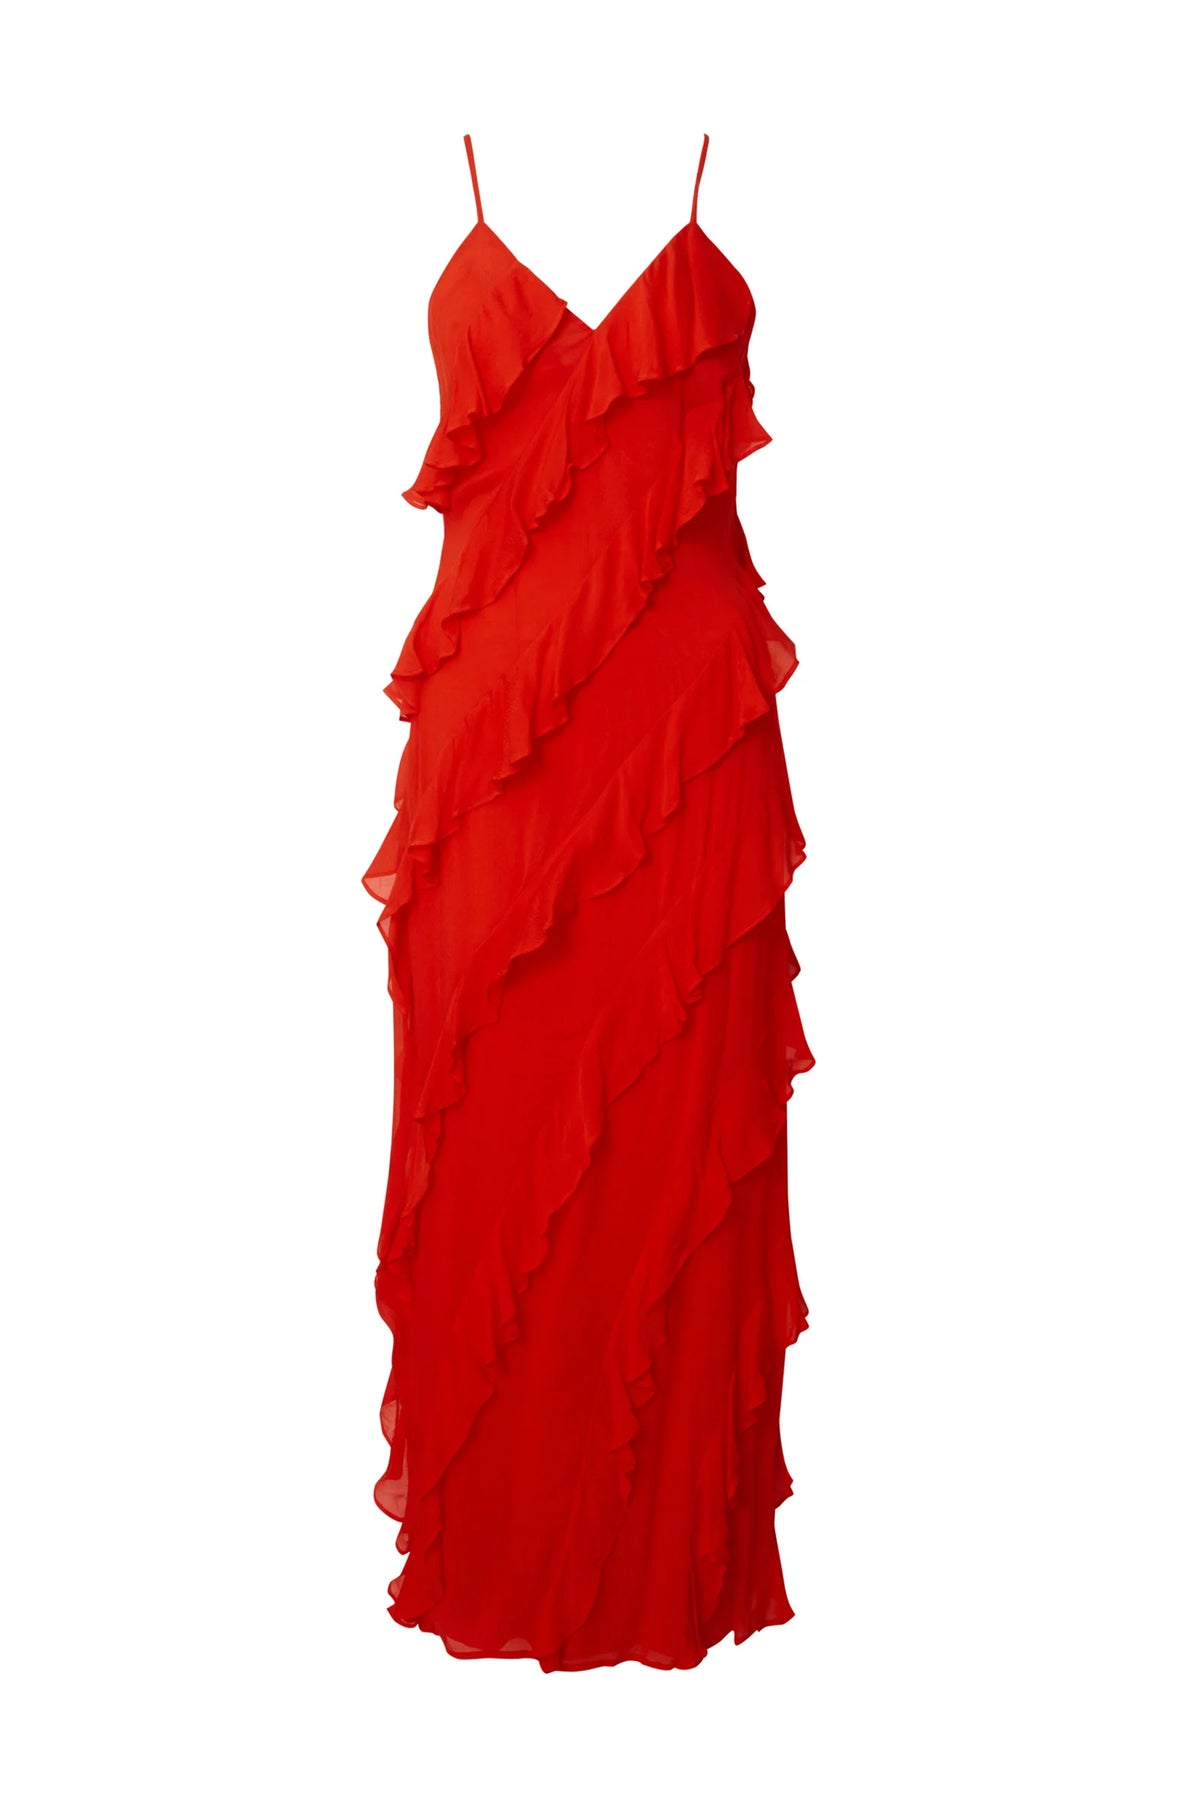 Orangey red diagonal frill strappy dress with V neckline